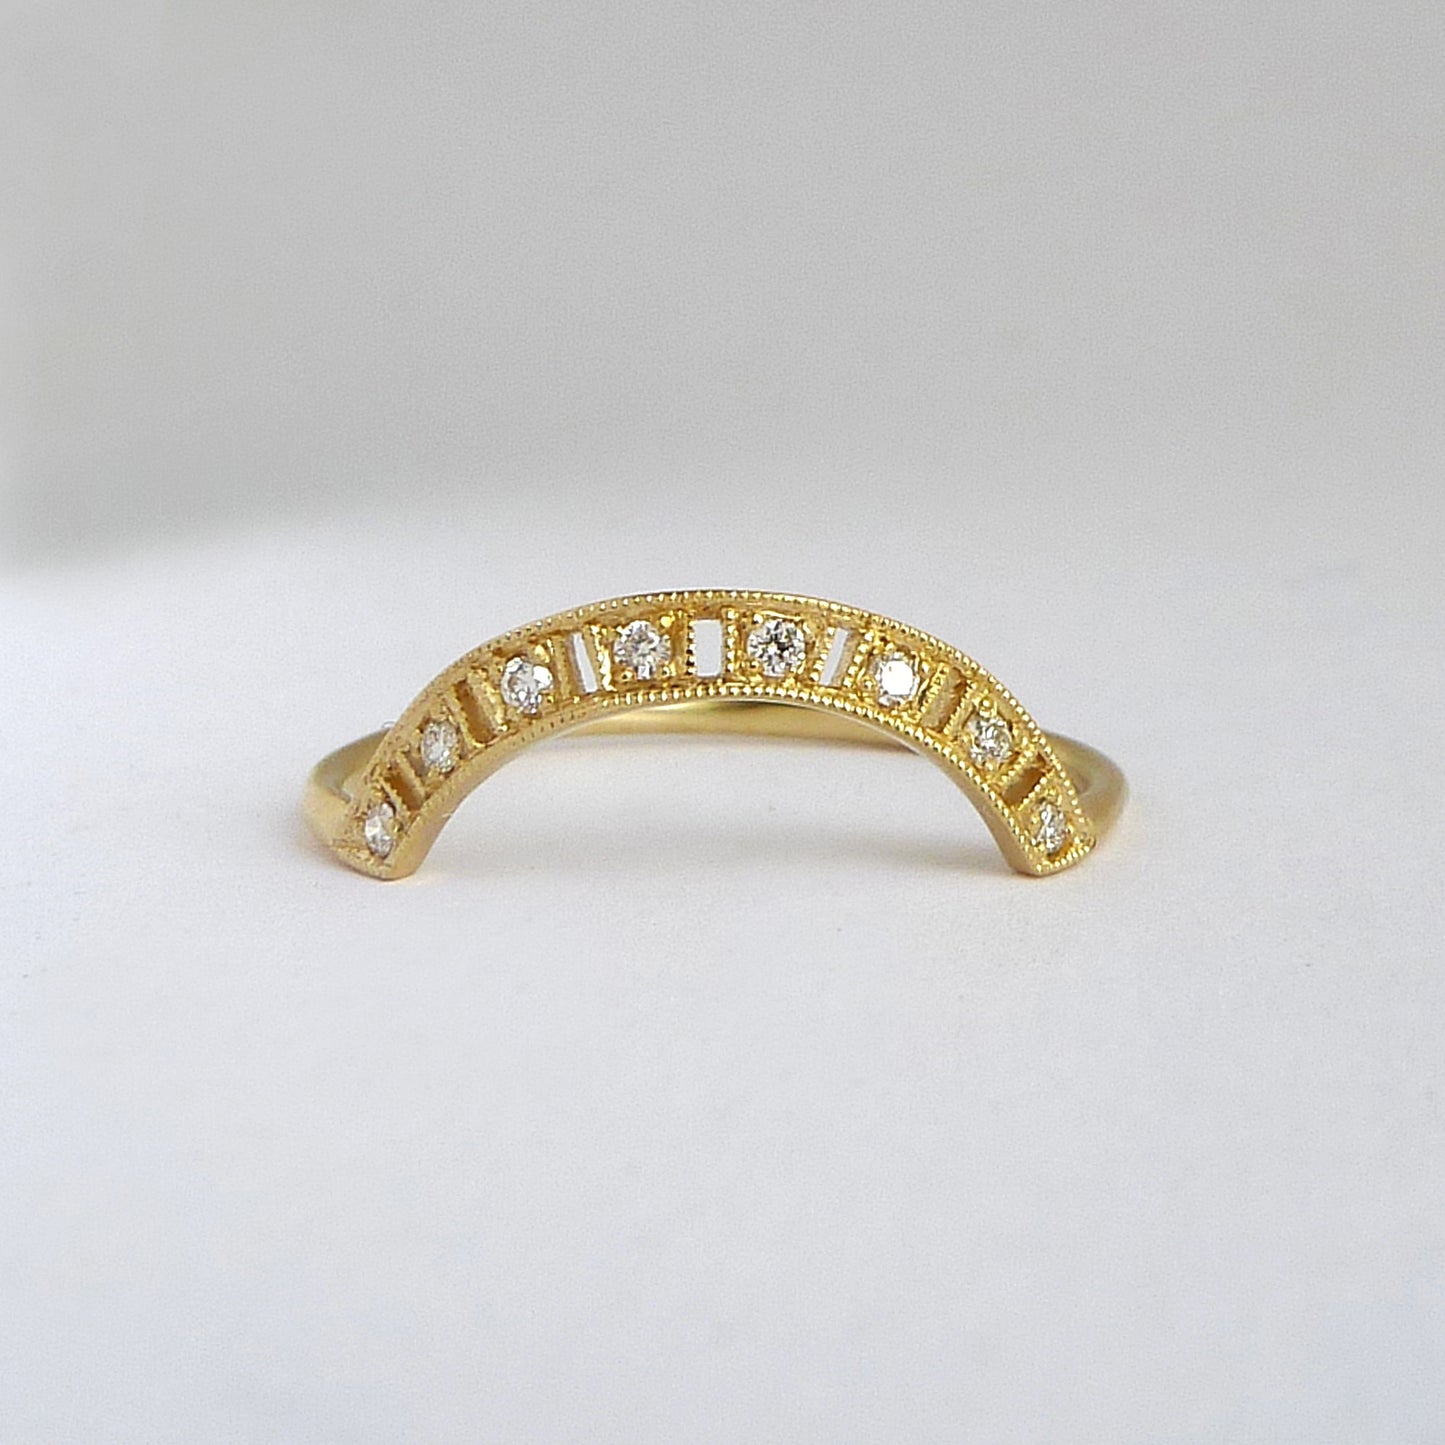 Arched Cassat Ring